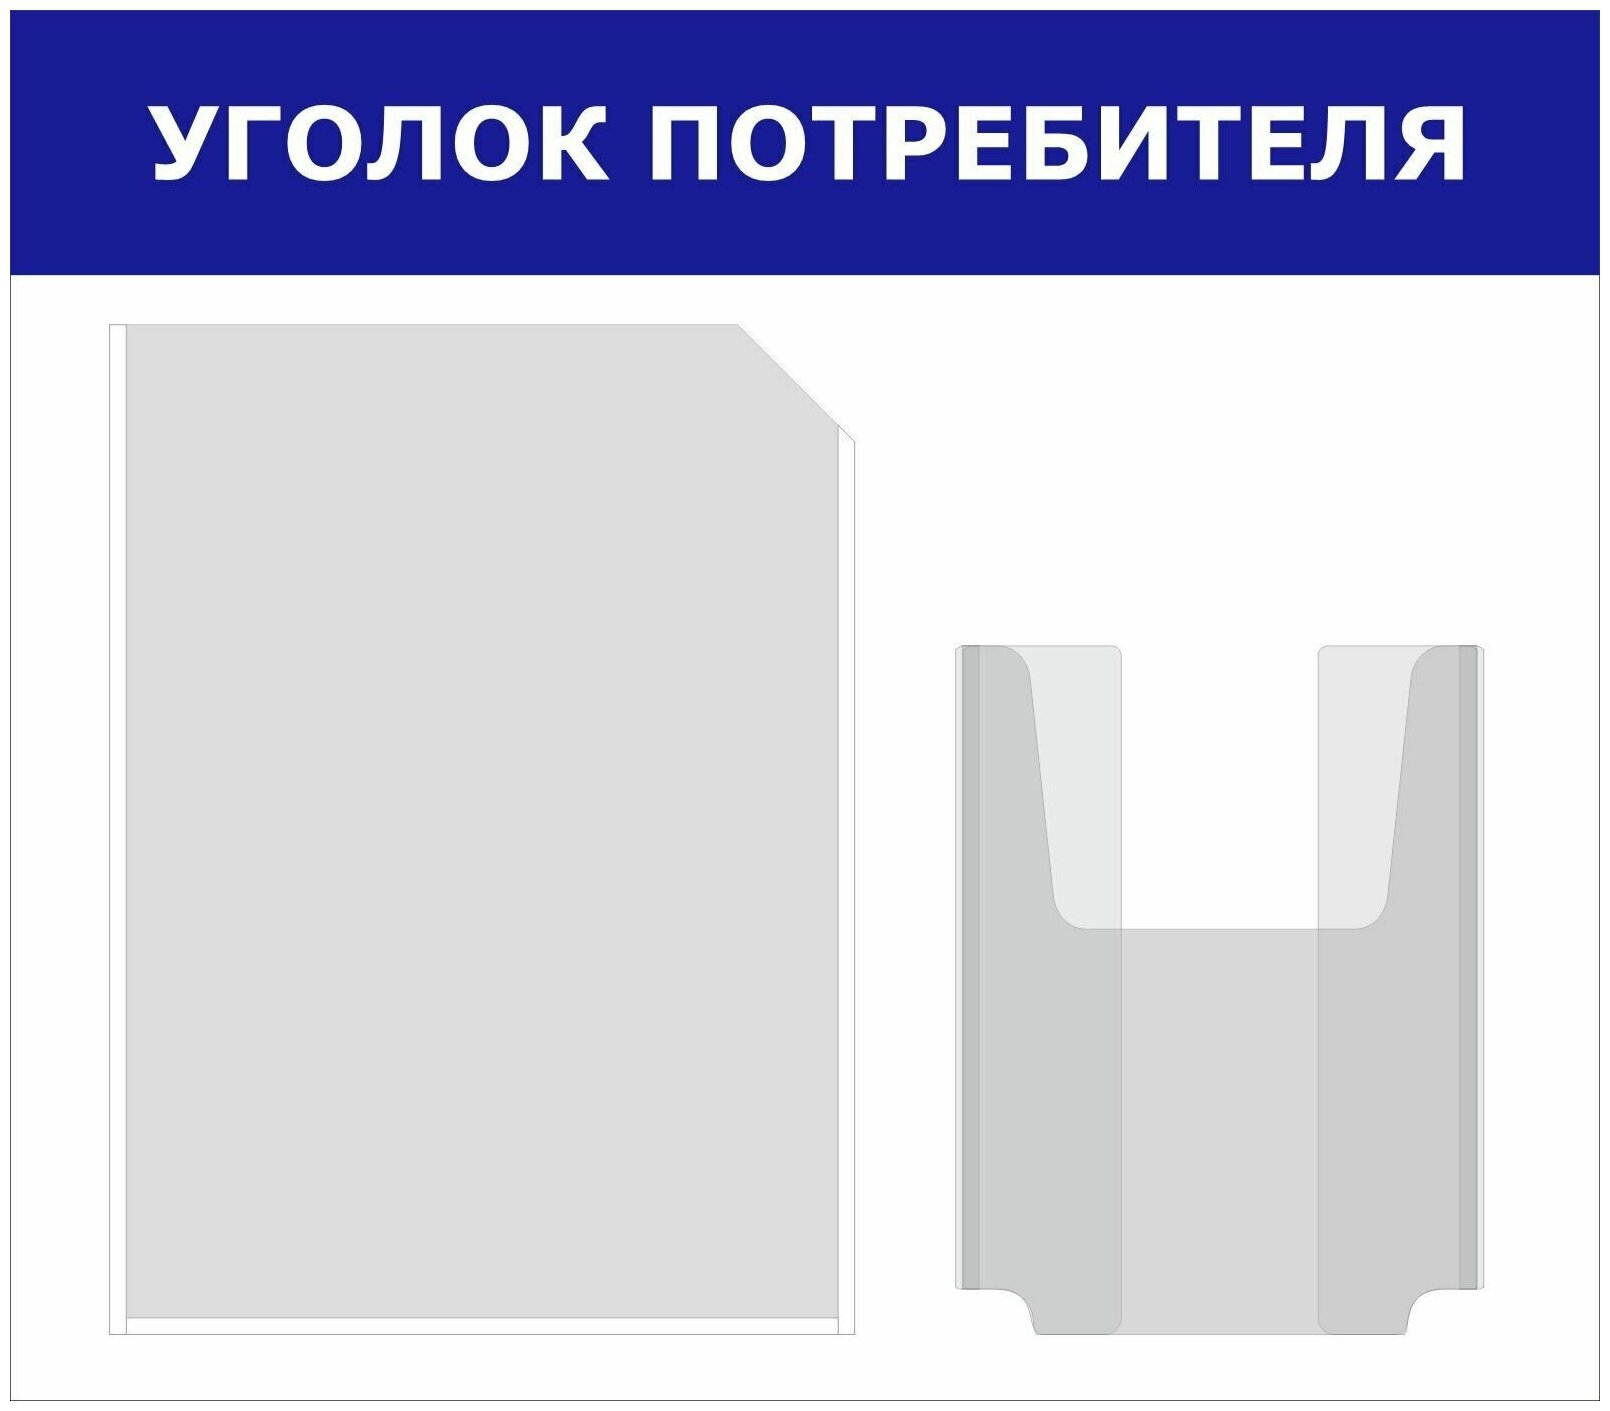 Информационный стенд "уголок потребителя", 2 кармана, 480х420 мм, STUFF